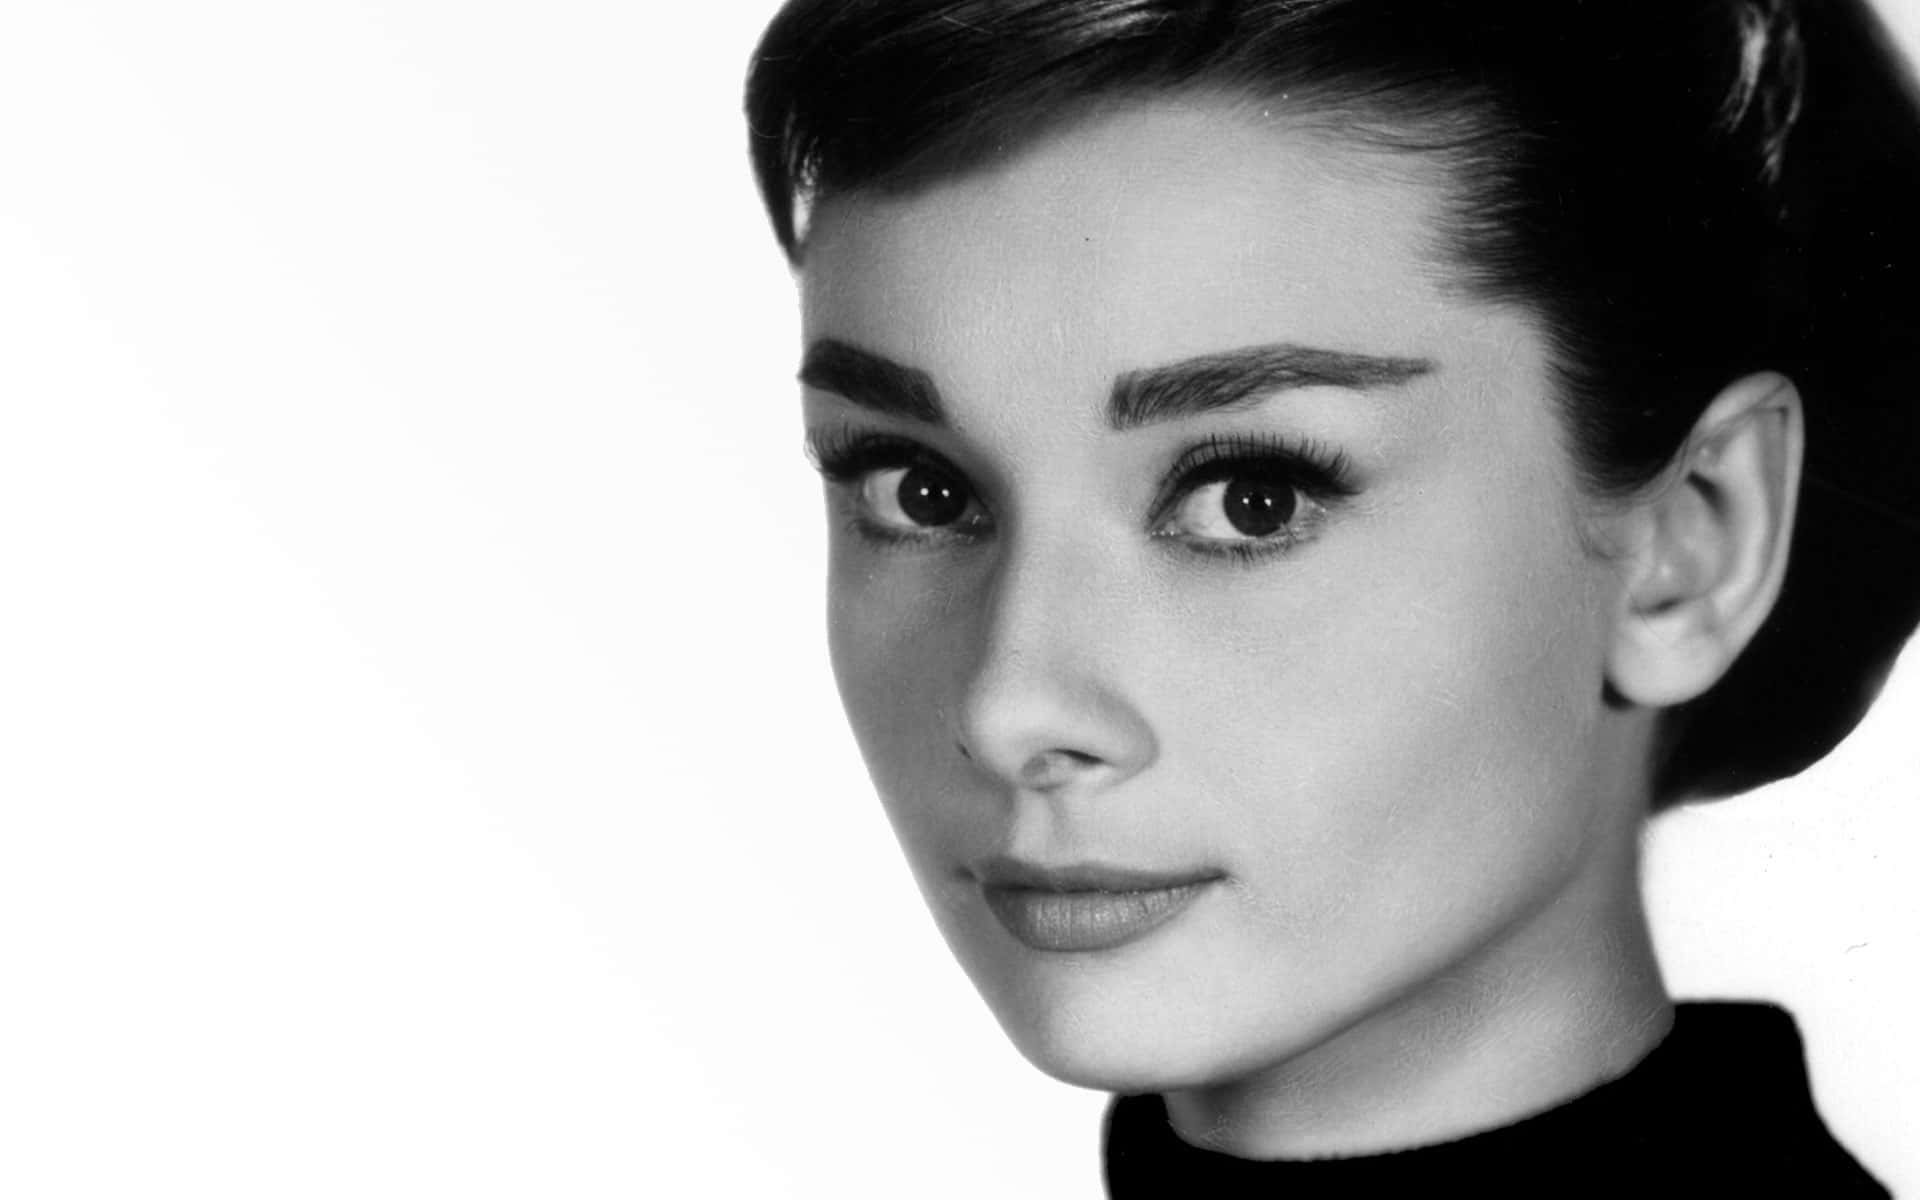 A timeless portrait of Audrey Hepburn